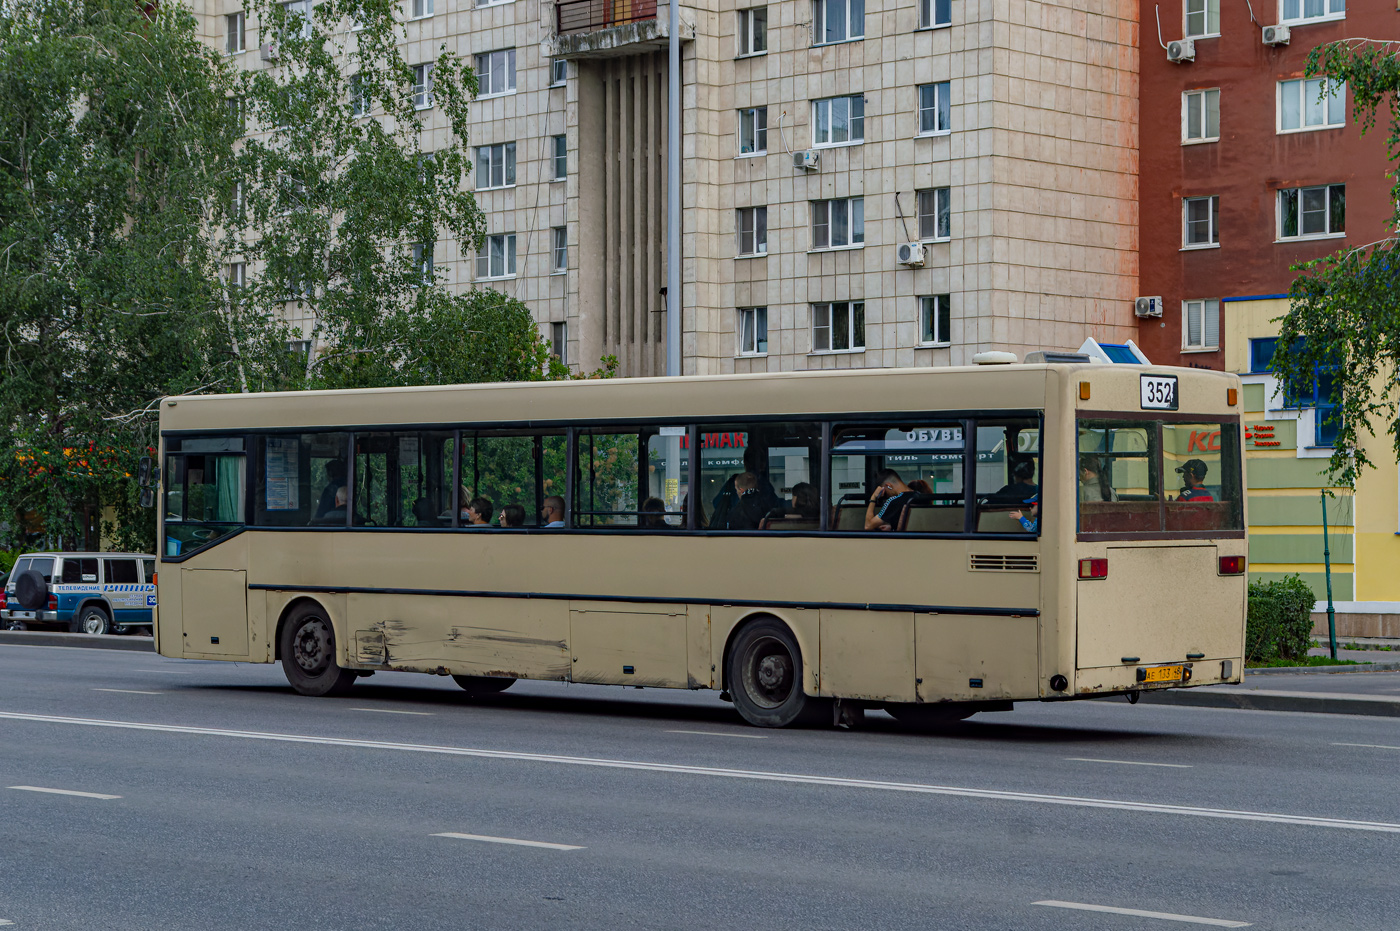 Lipetsk region, Mercedes-Benz O405 № АЕ 133 48